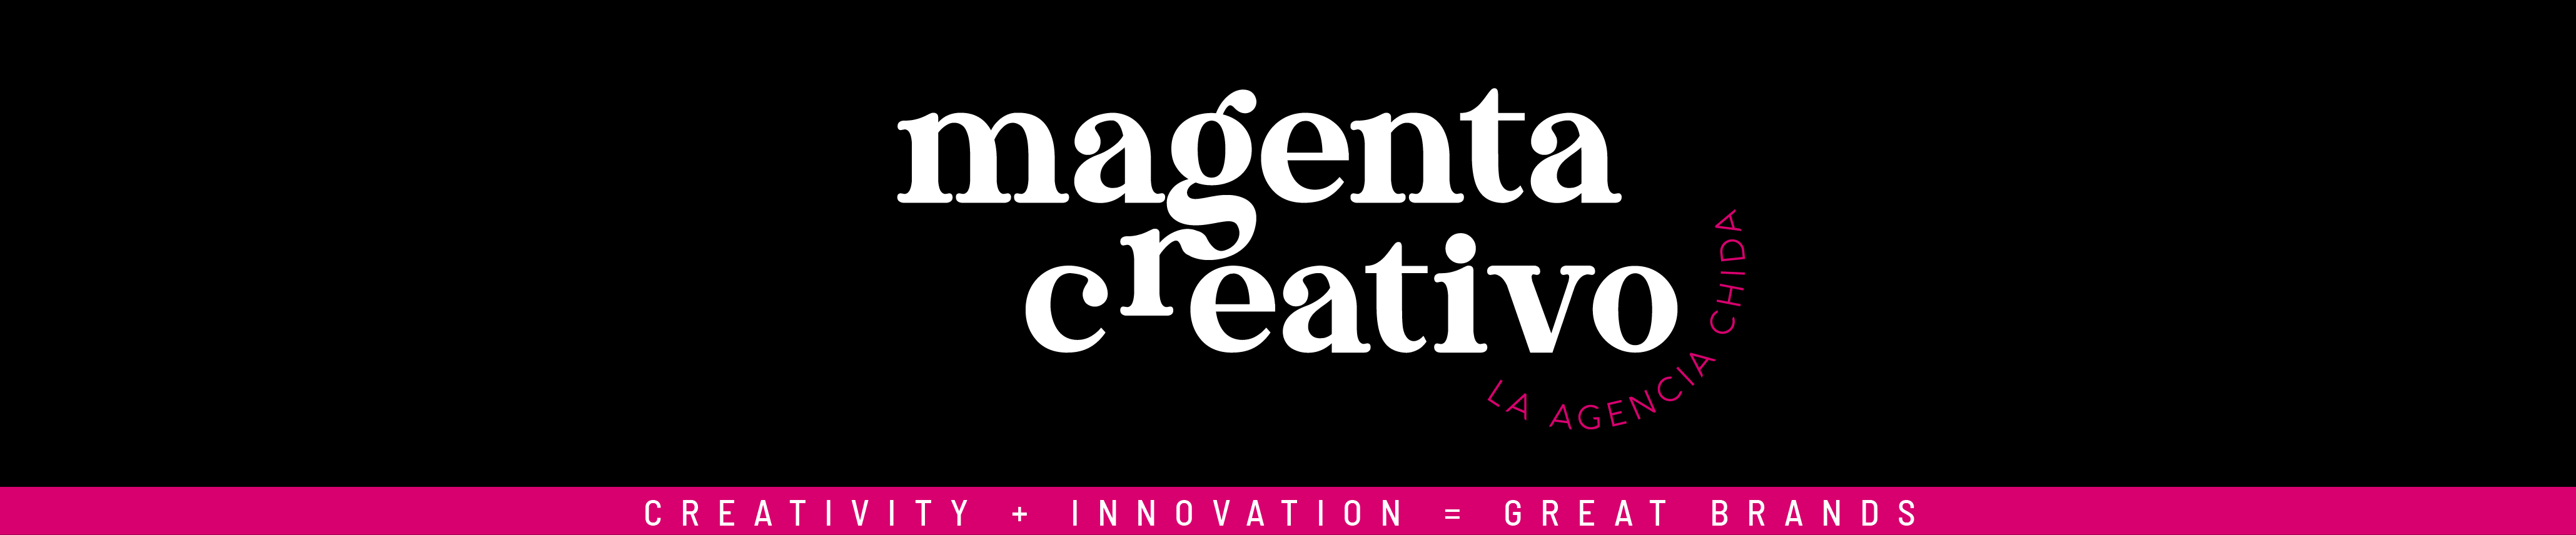 Magenta Creativo MX profil başlığı